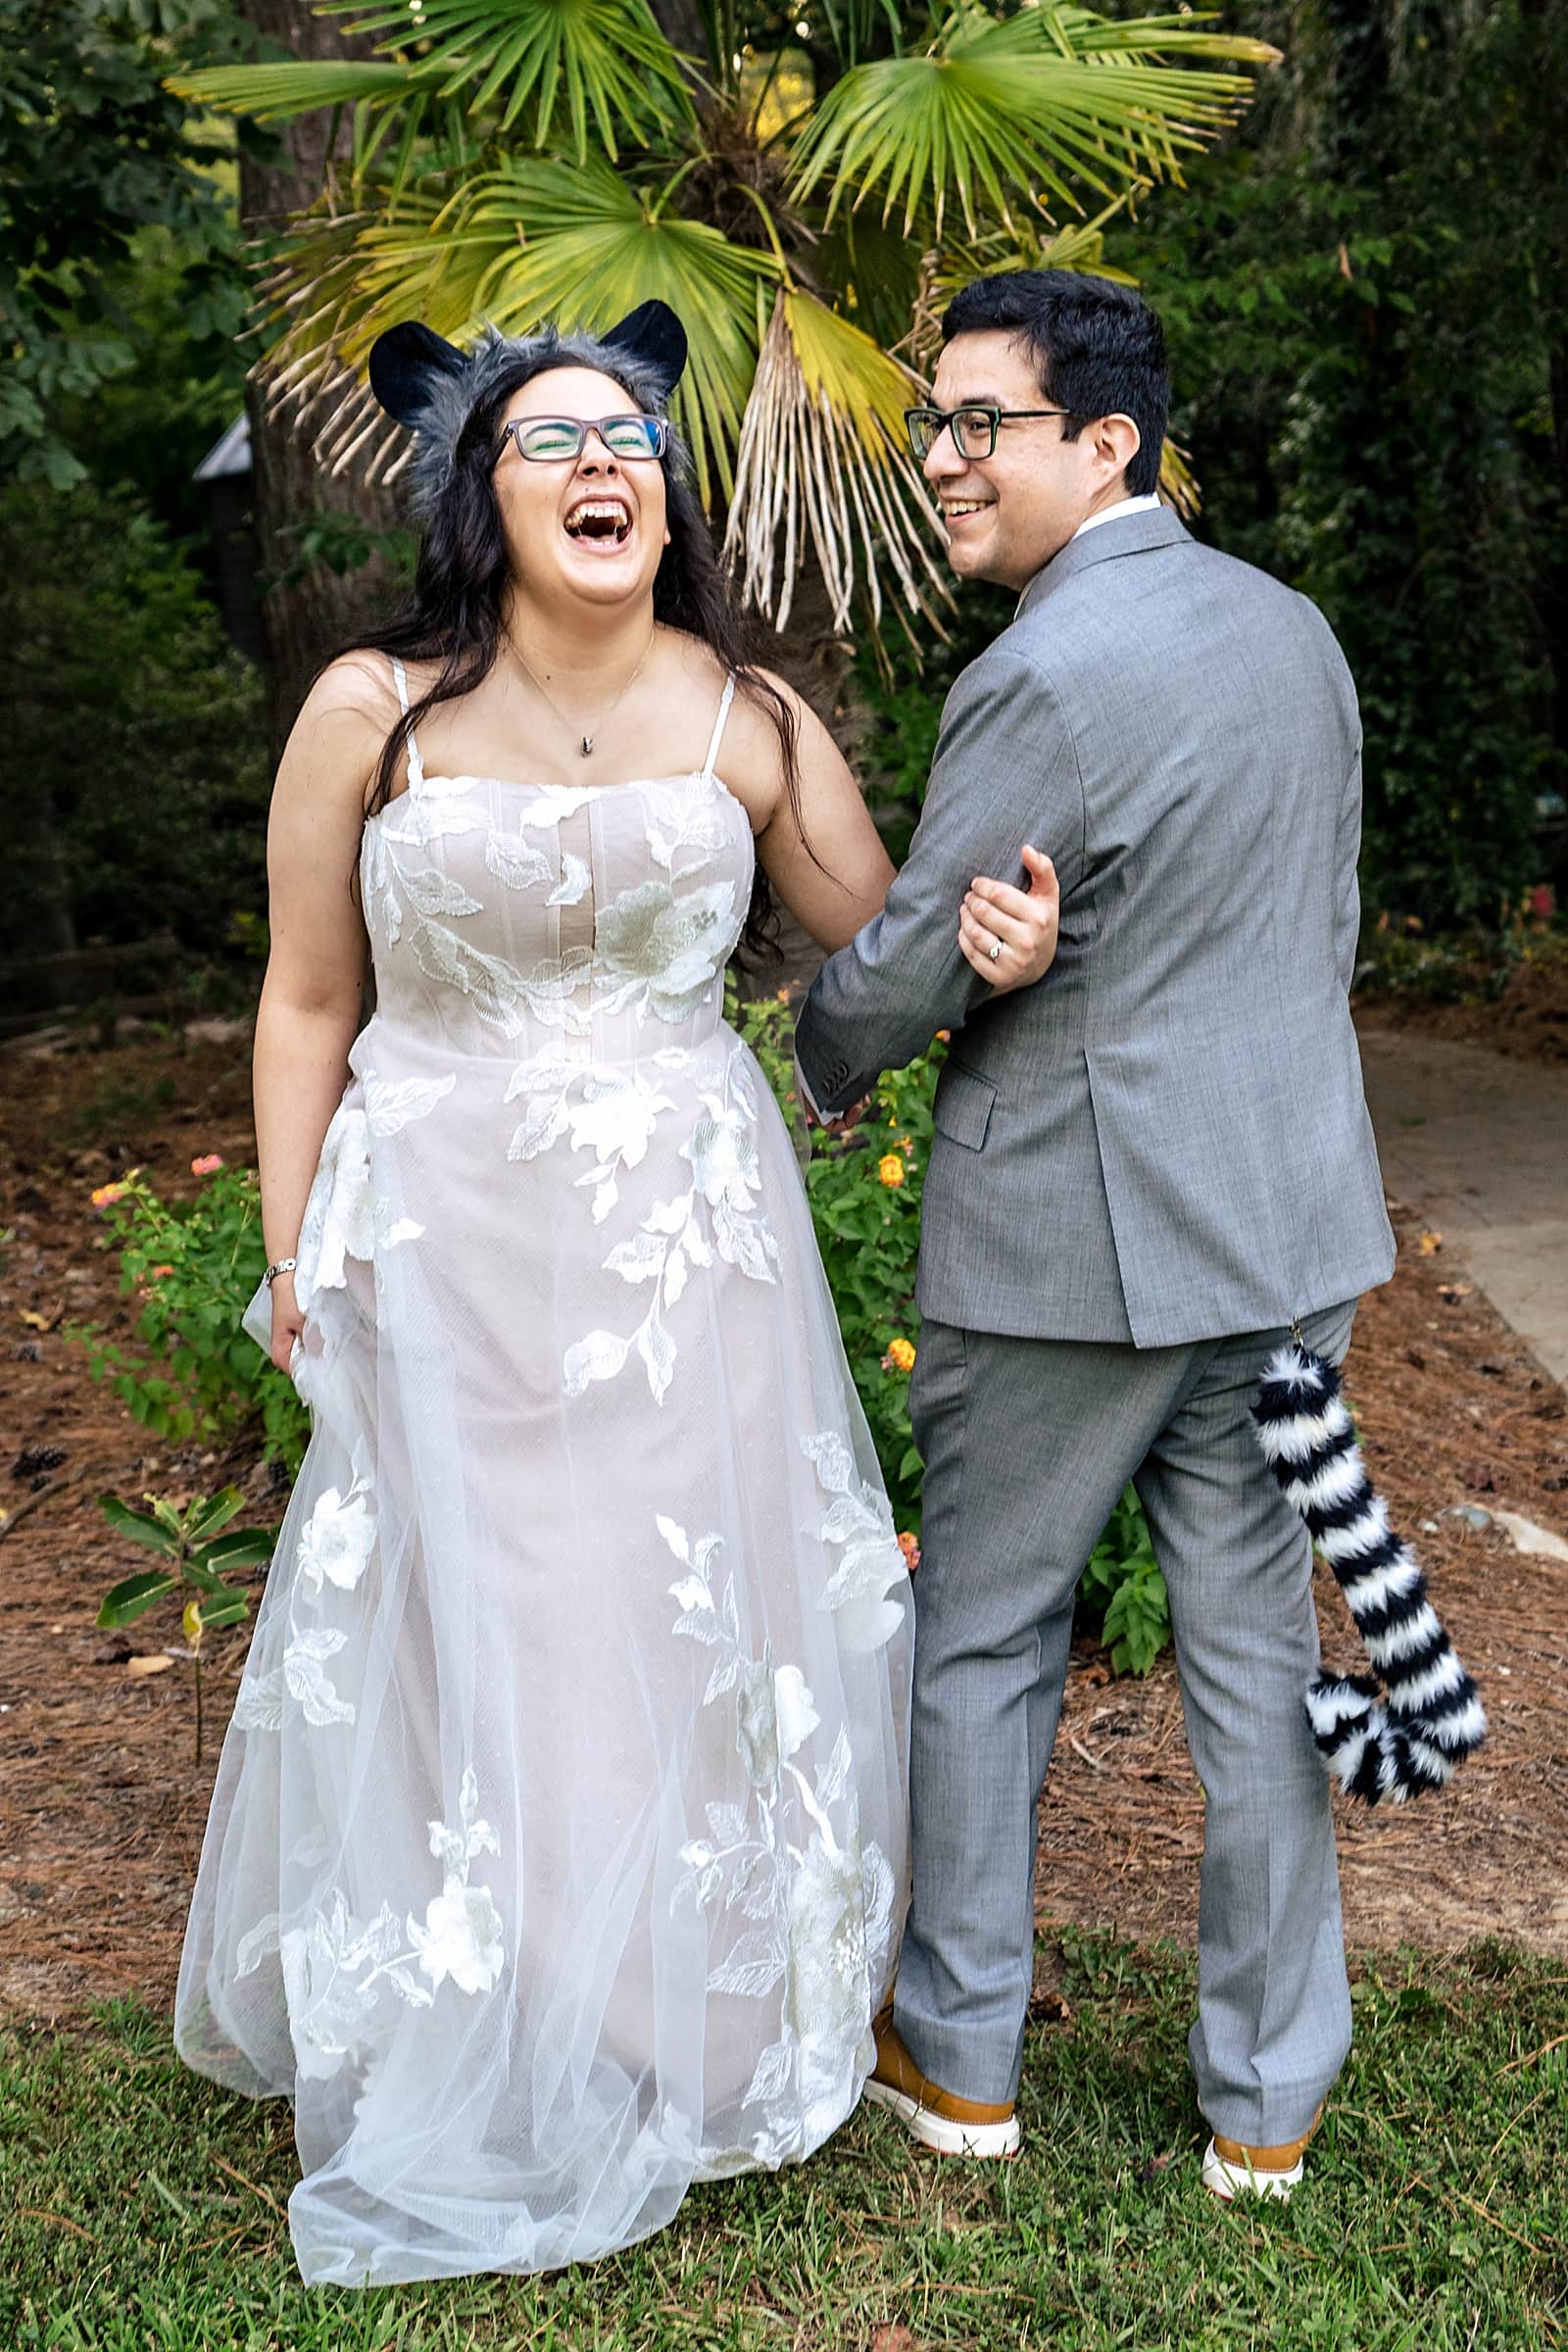 Duke Lemur Center wedding - one of the most unique wedding ideas!